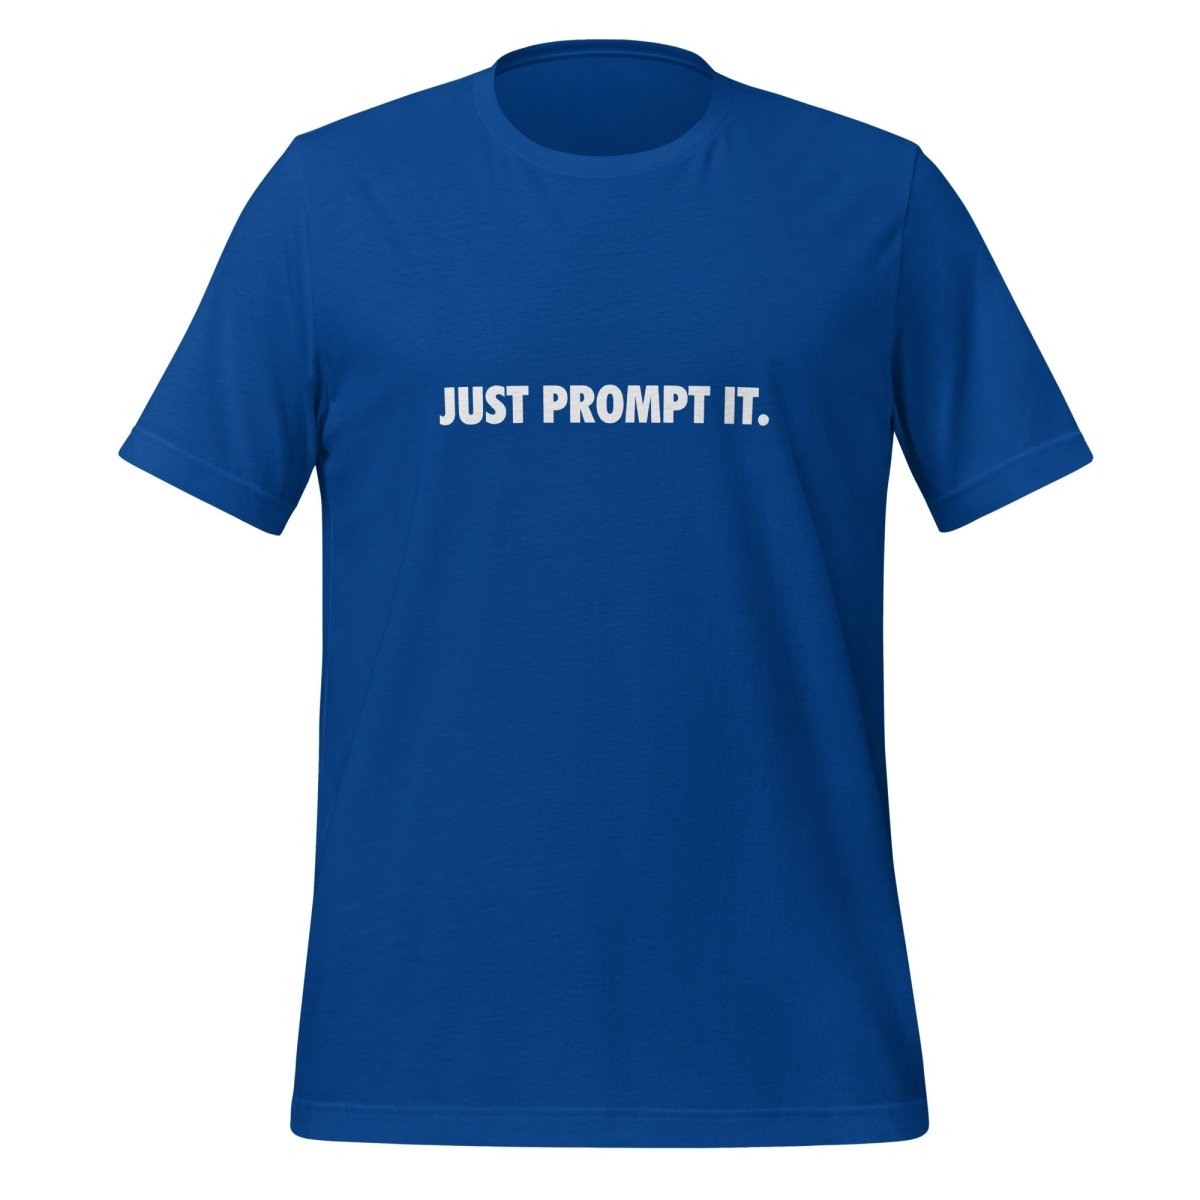 JUST PROMPT IT. T - Shirt (unisex) - True Royal - AI Store